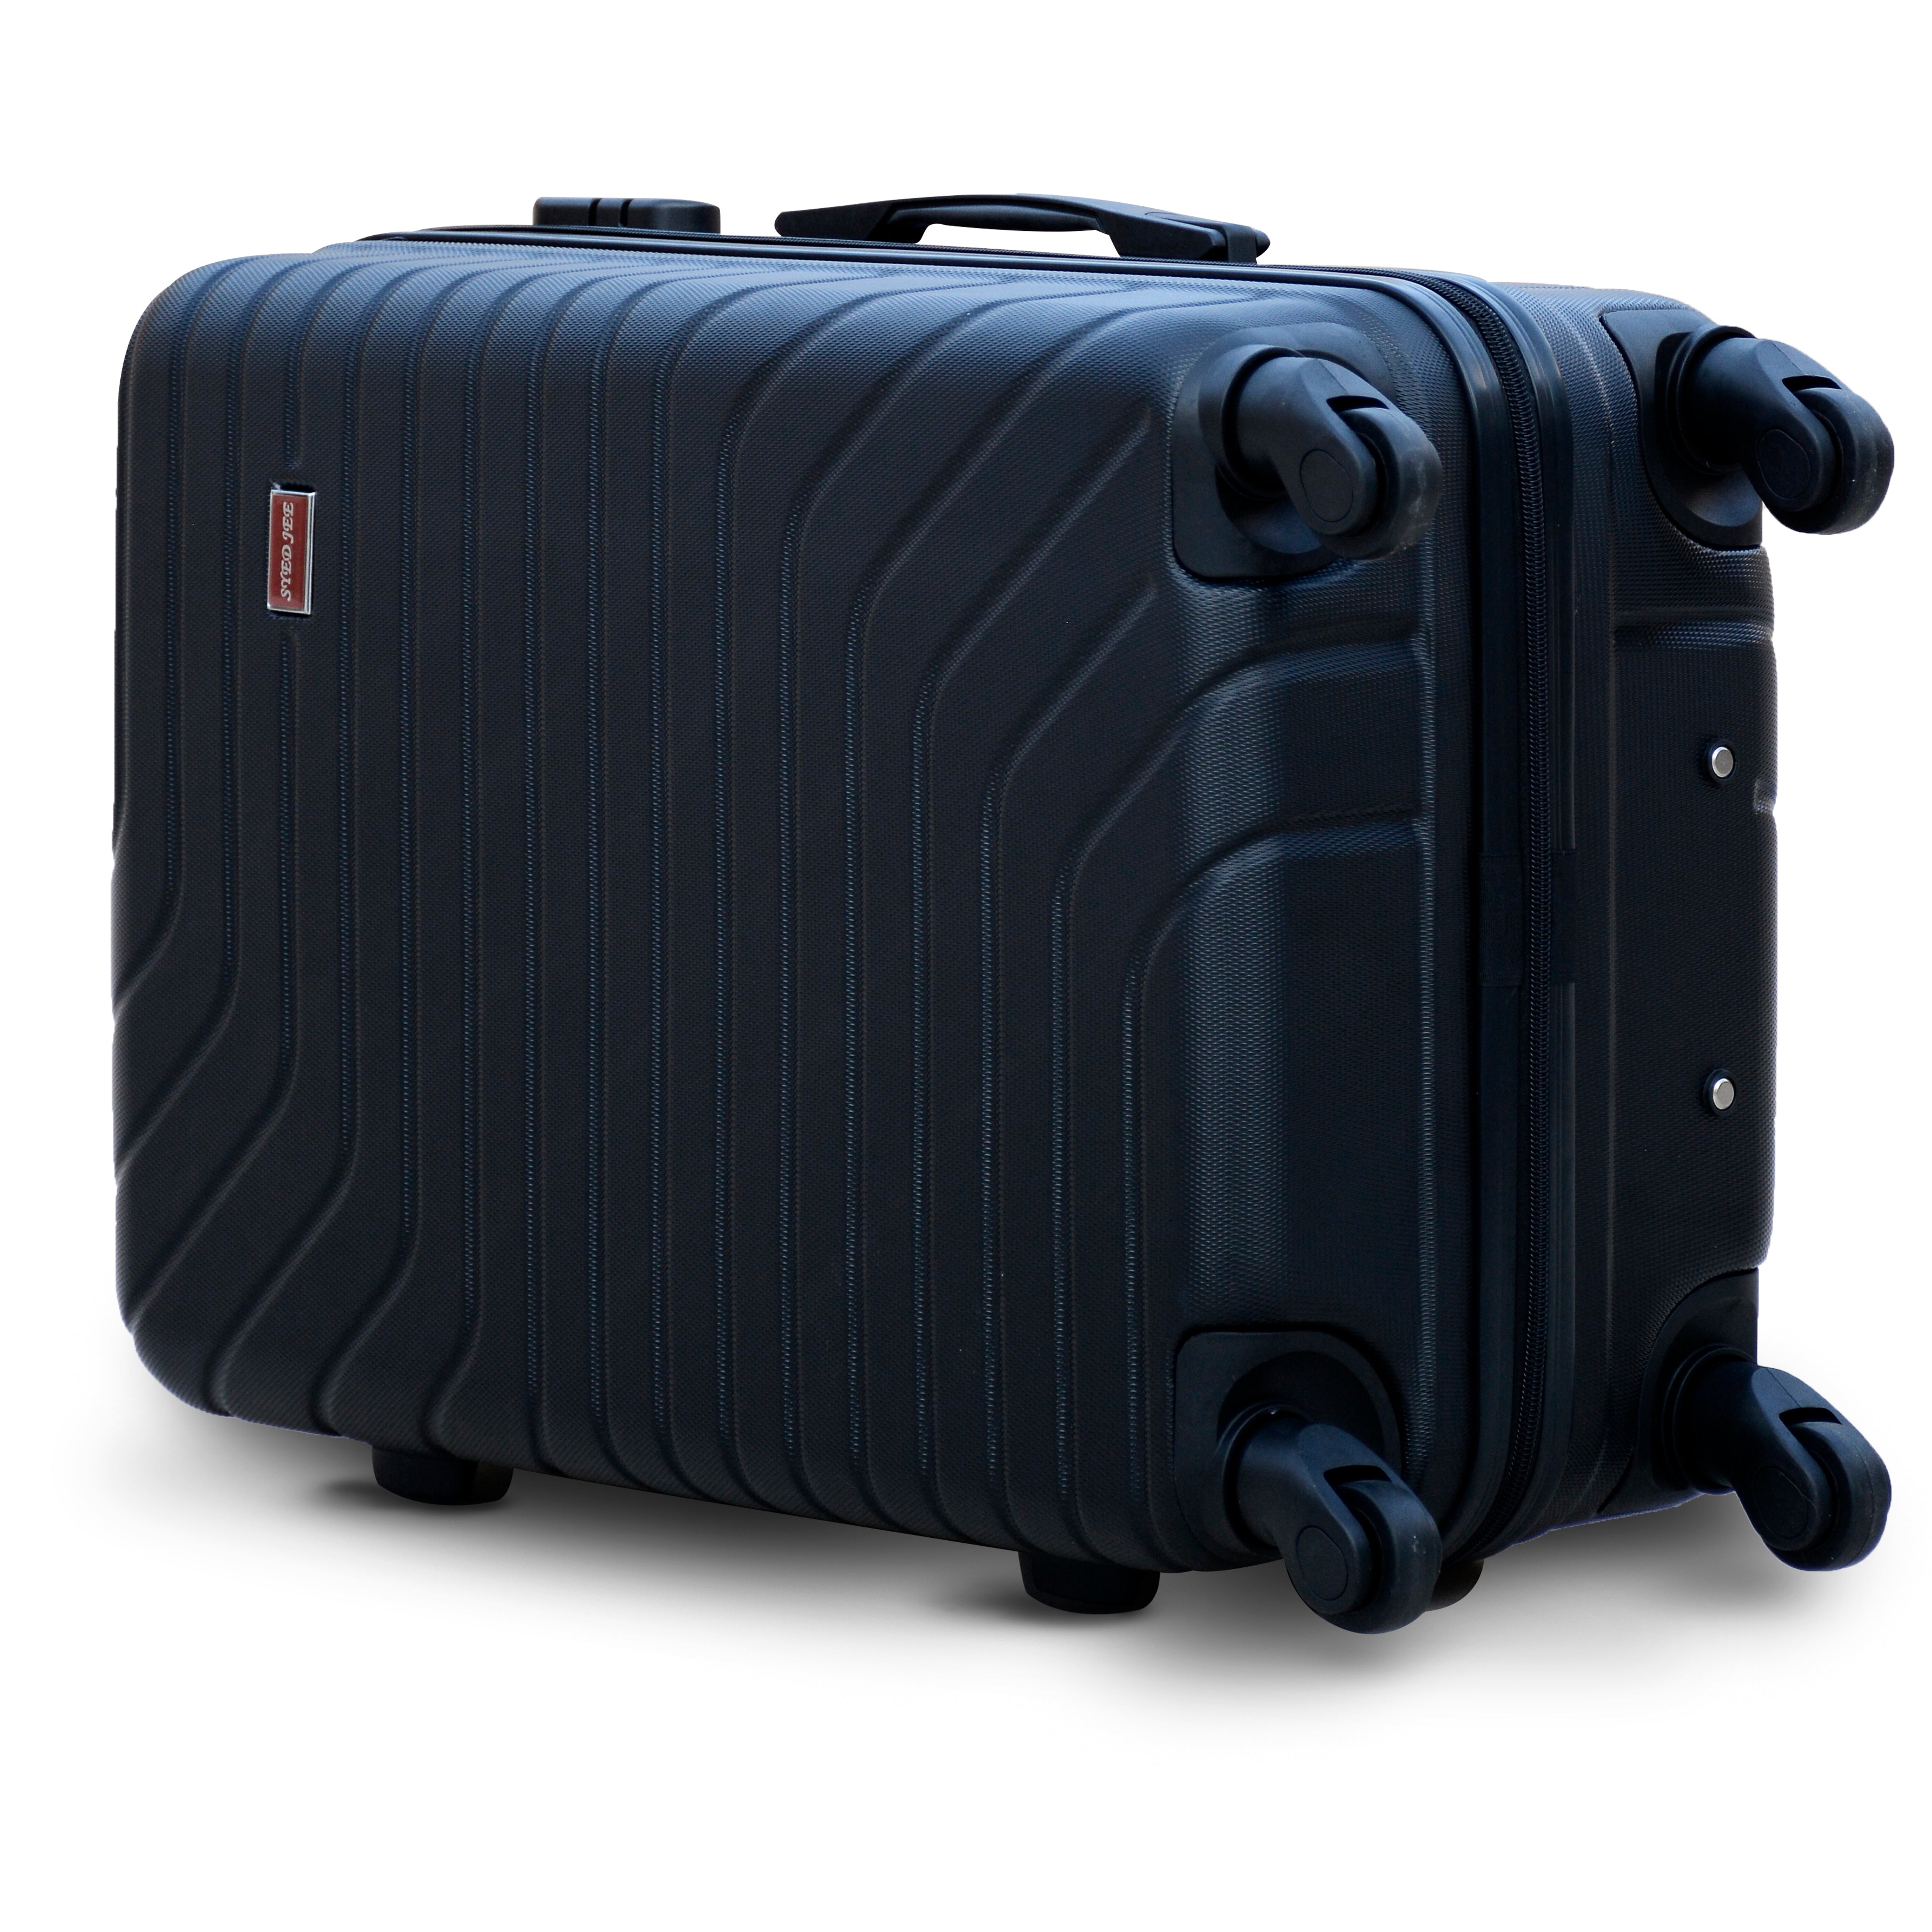 20" Black Colour SJ ABS Luggage Lightweight Hard Case Trolley Bag